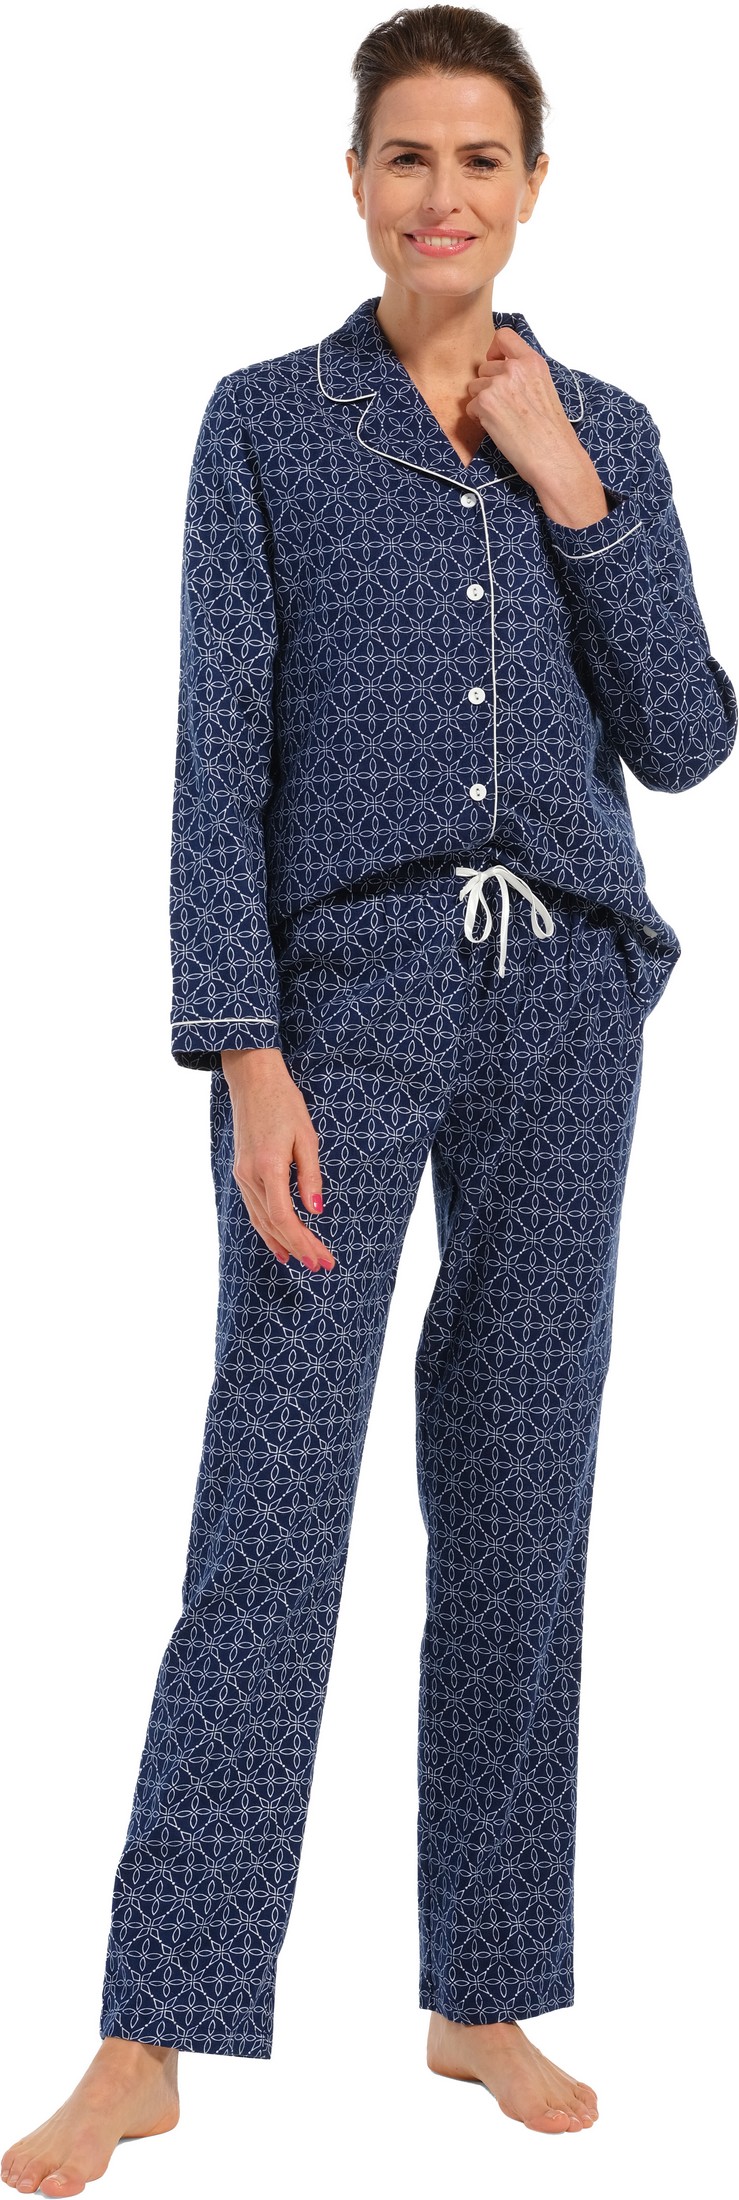 Pastunette dames pyjama flanel 20232-120-6 - Blauw - 44